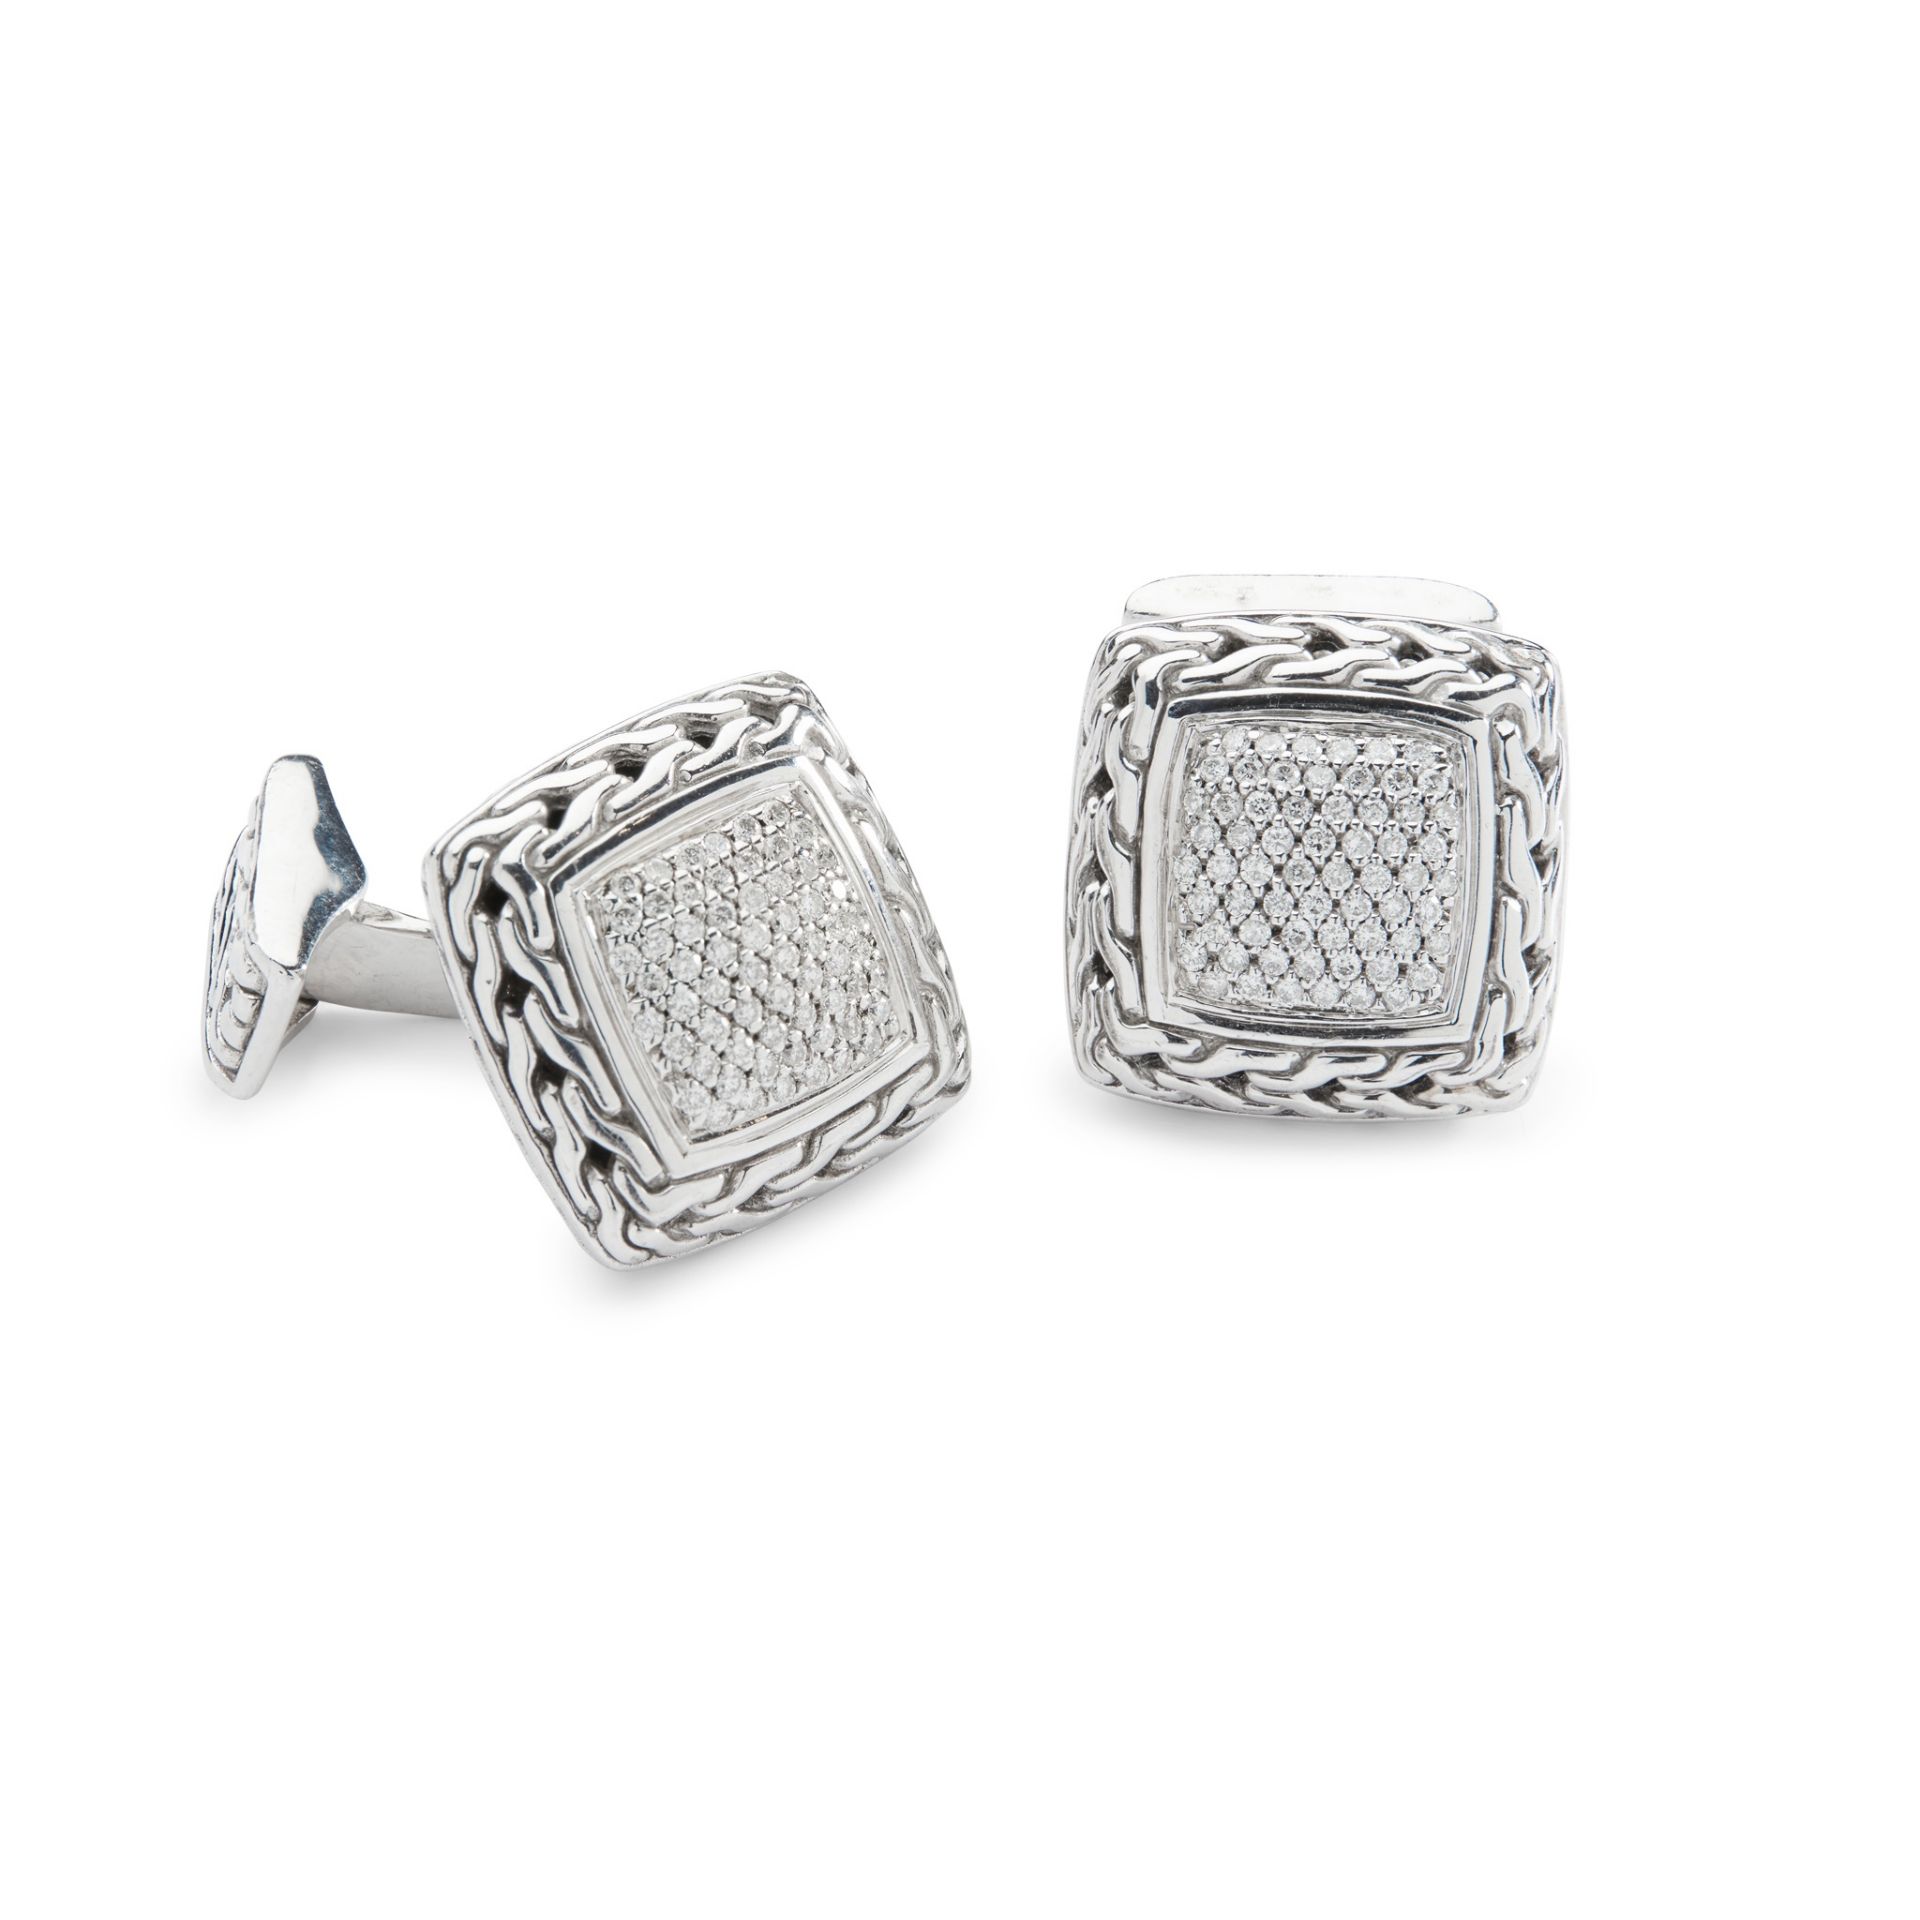 A pair of diamond cufflinks